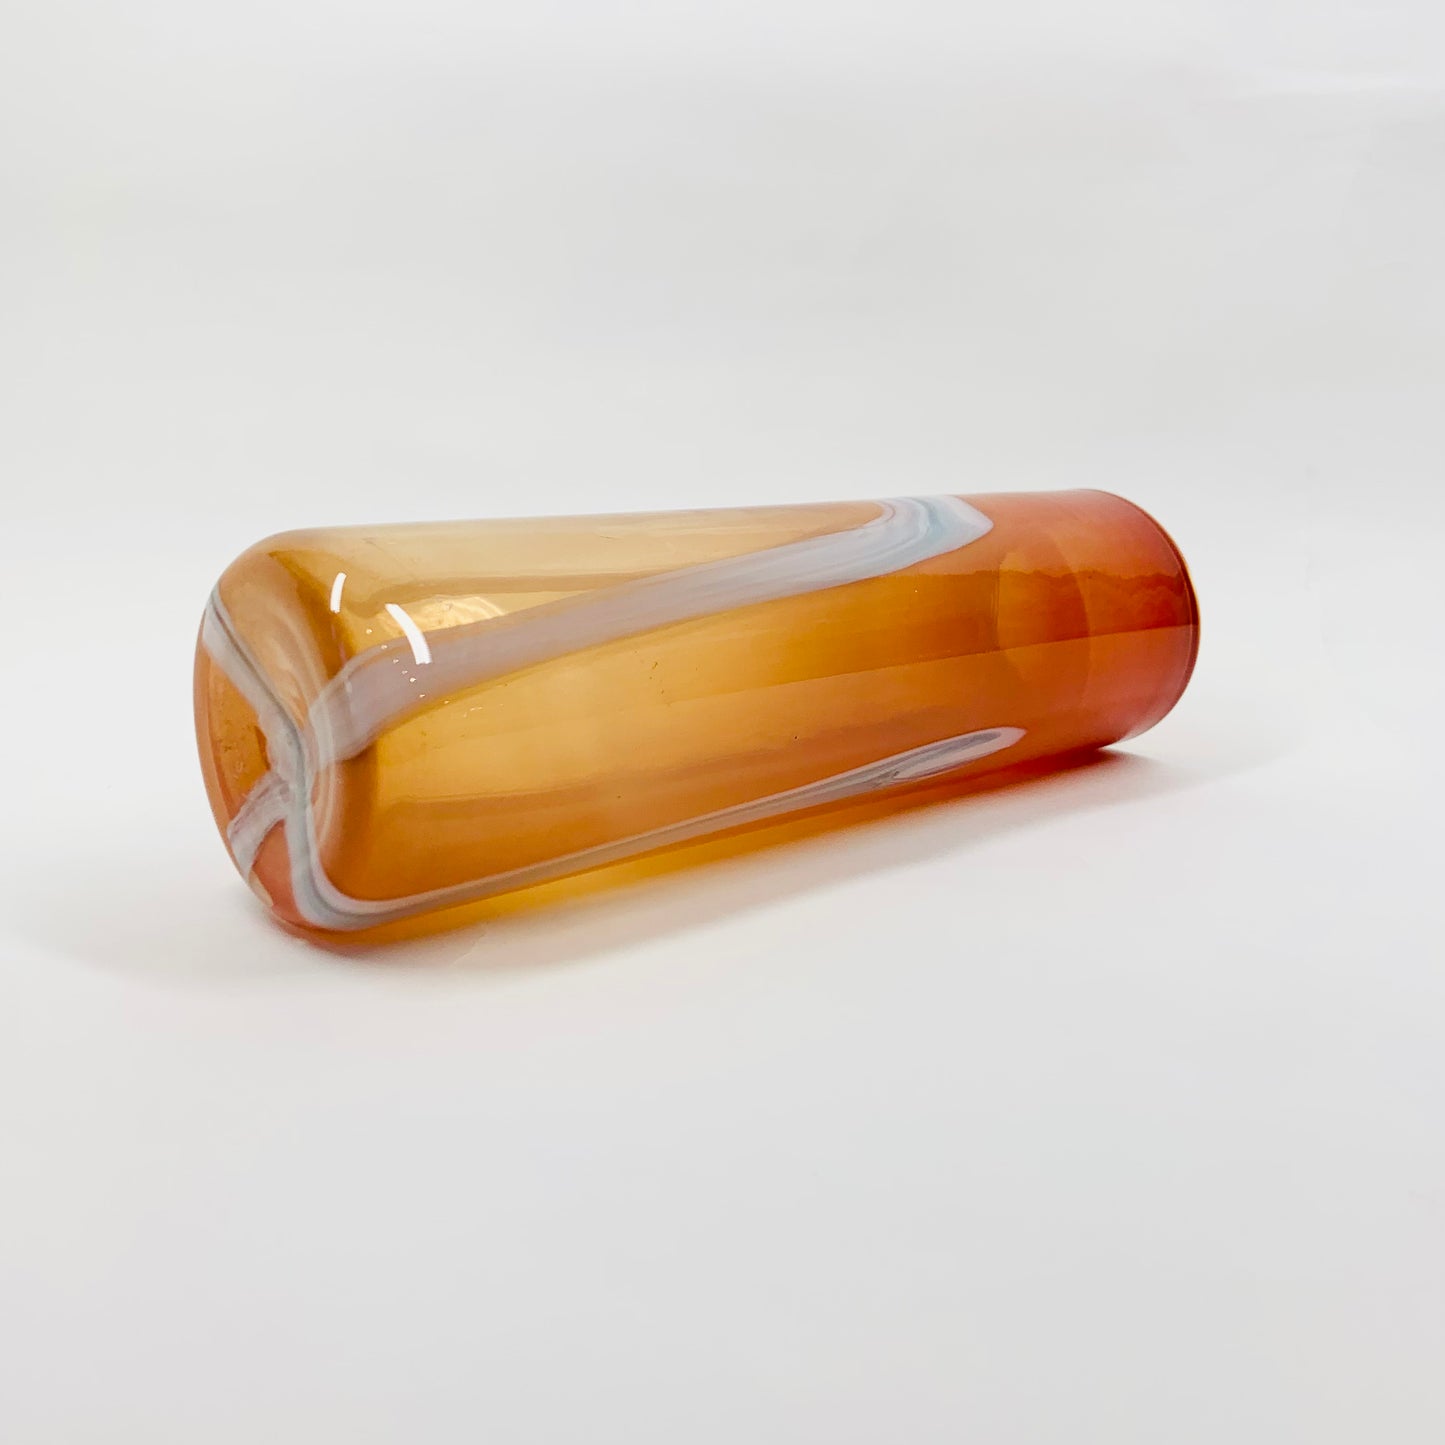 1980s orange mouth blown studio art glass tube vase by Suzanne Kindland